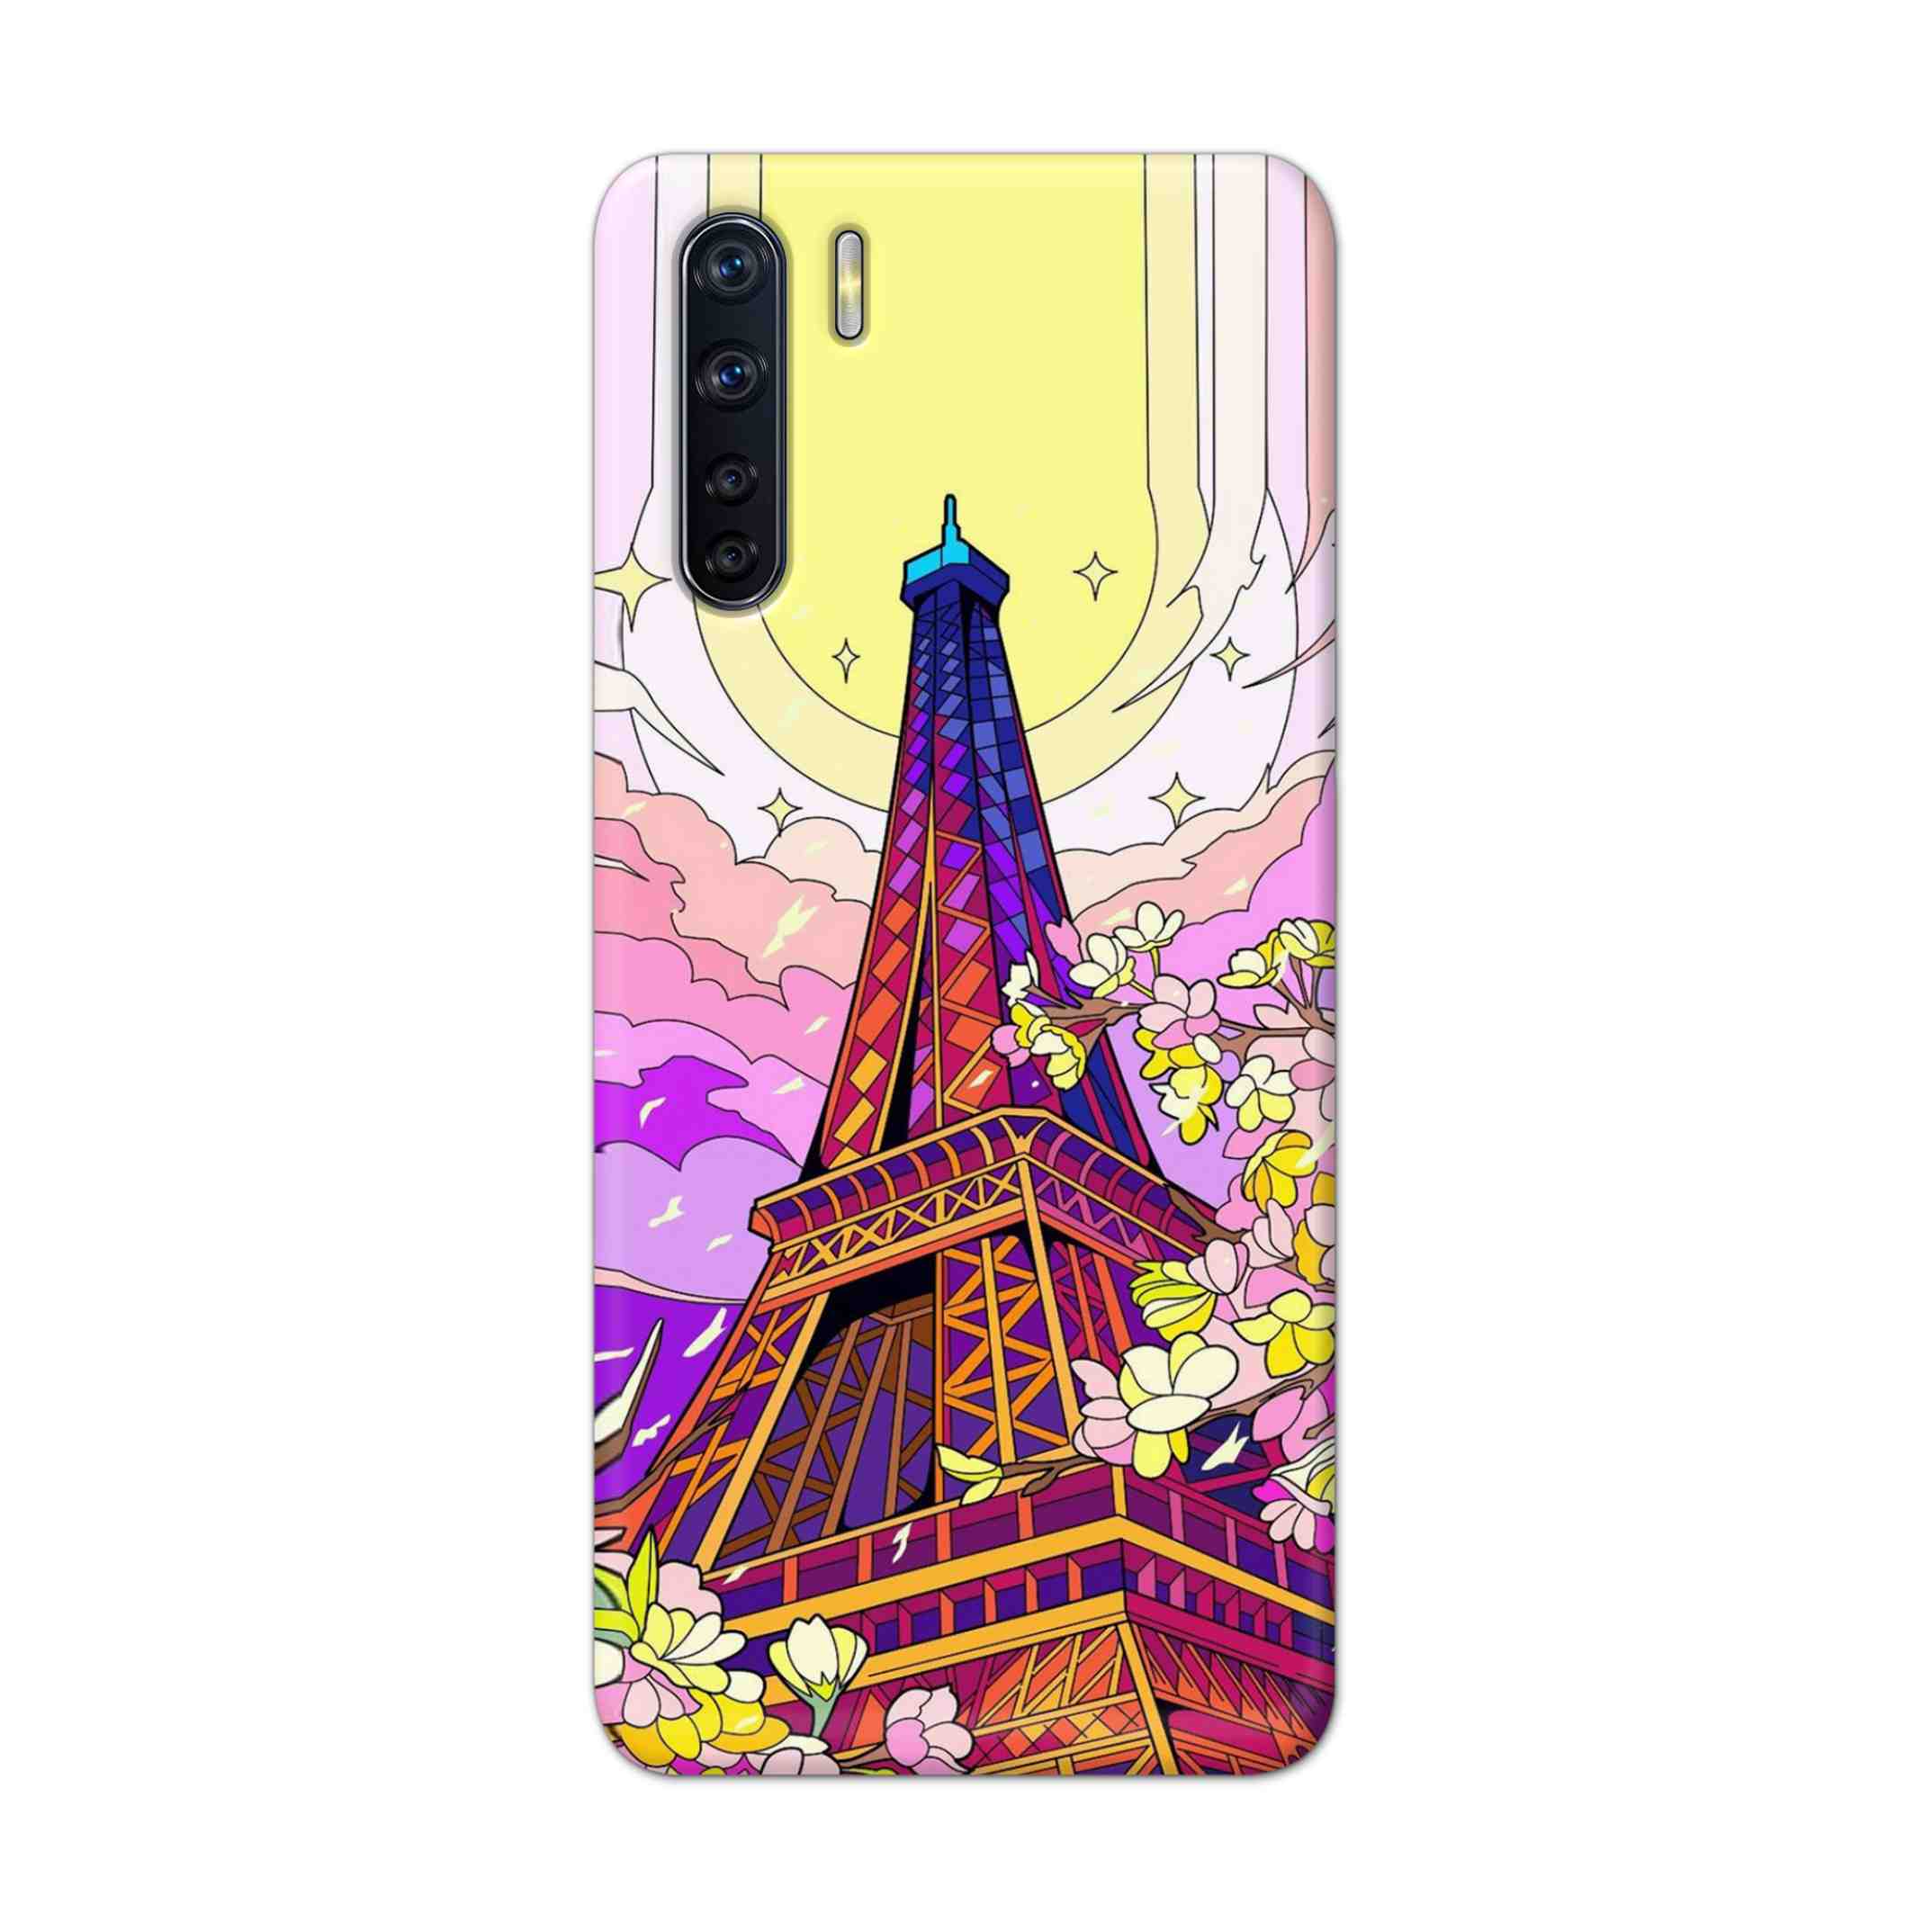 Buy Eiffel Tower Hard Back Mobile Phone Case Cover For OPPO F15 Online